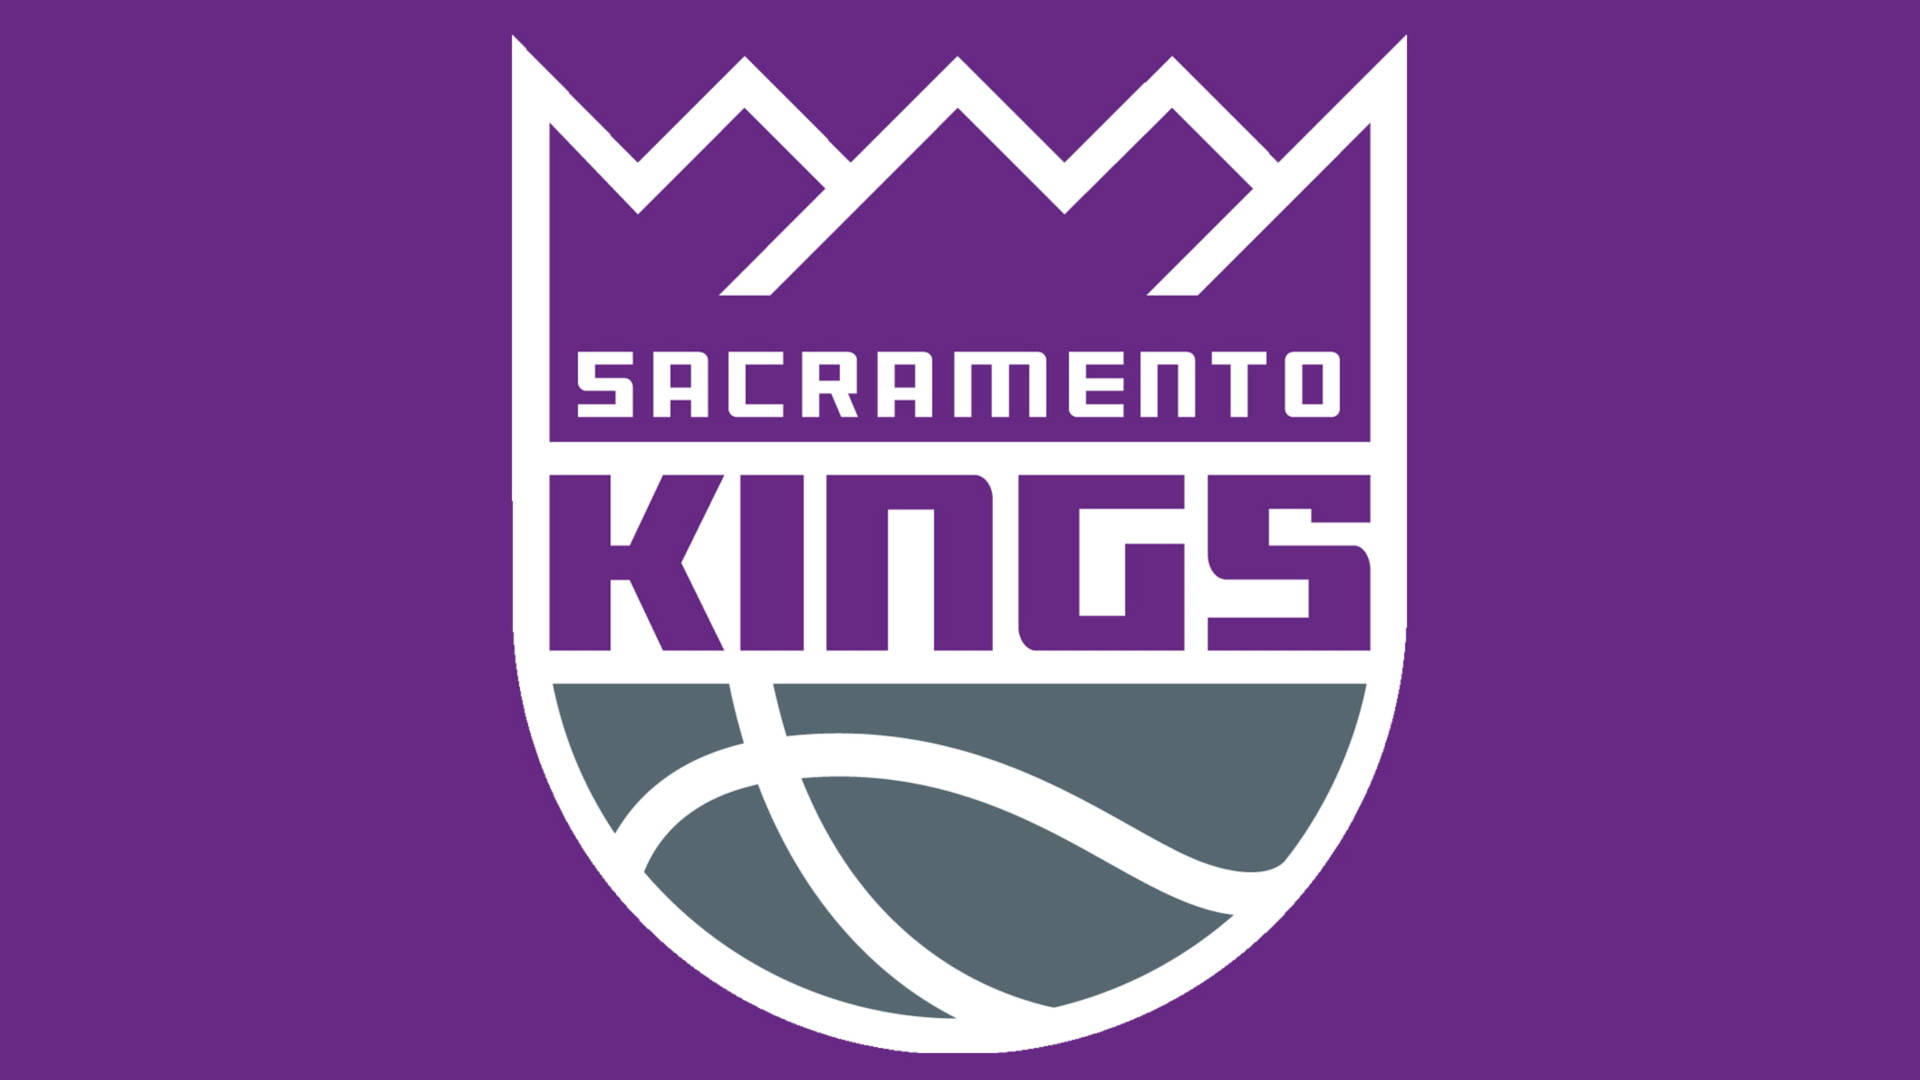 Top 999+ Sacramento Kings Wallpaper Full HD, 4K✅Free to Use